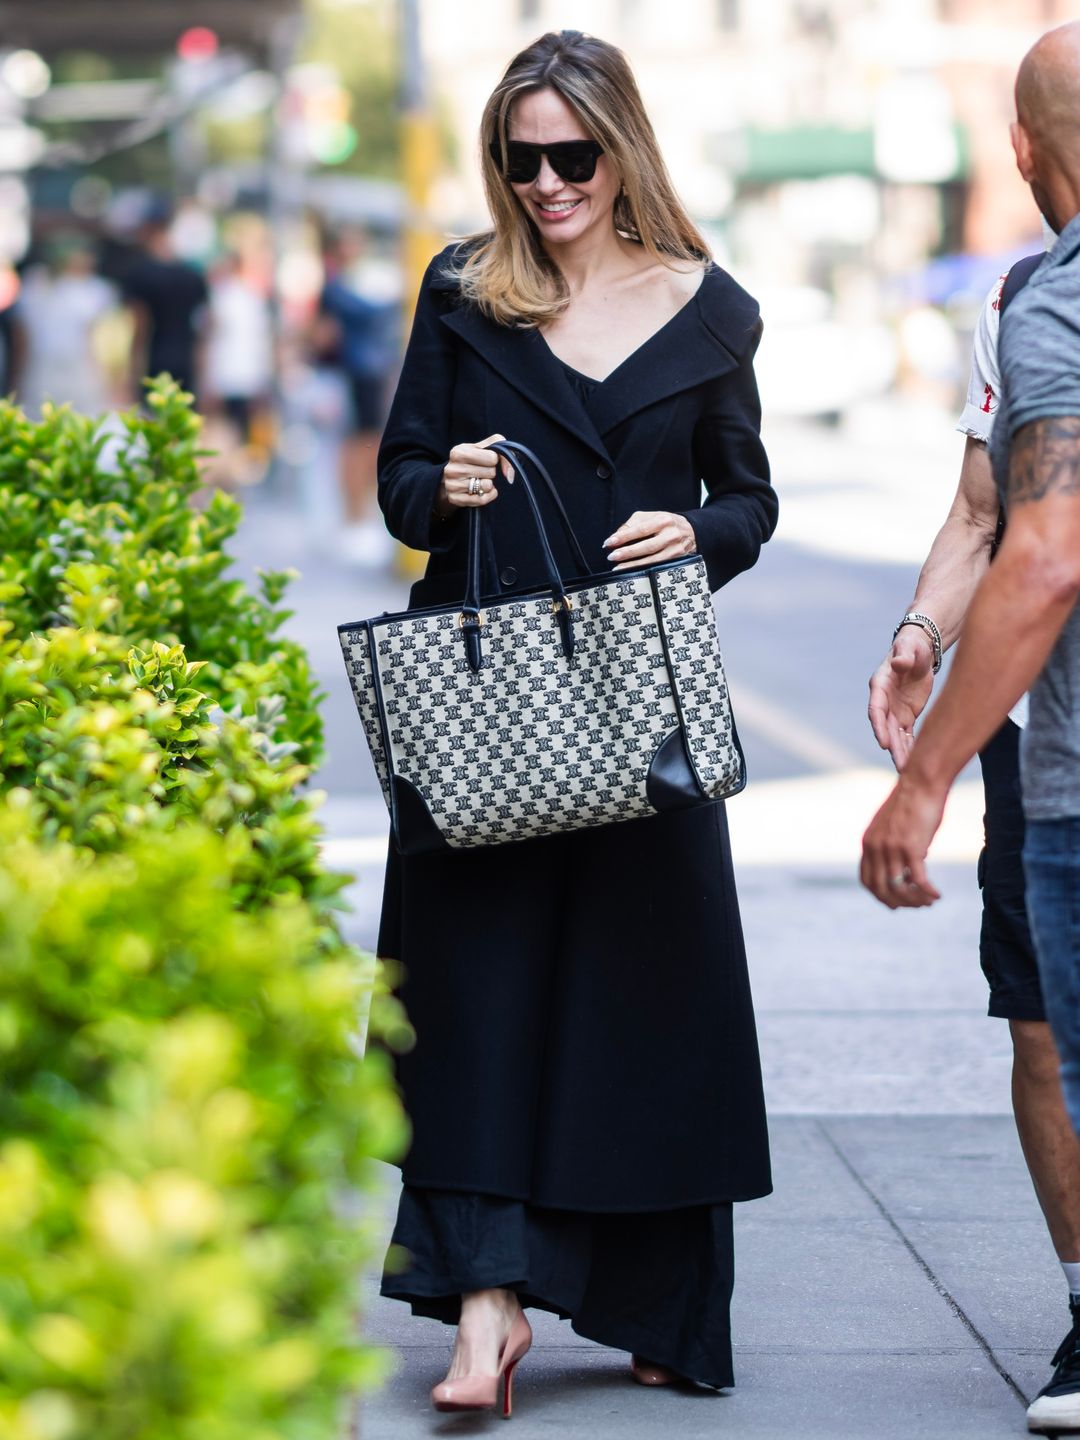 Angelina on street in a black slip dress